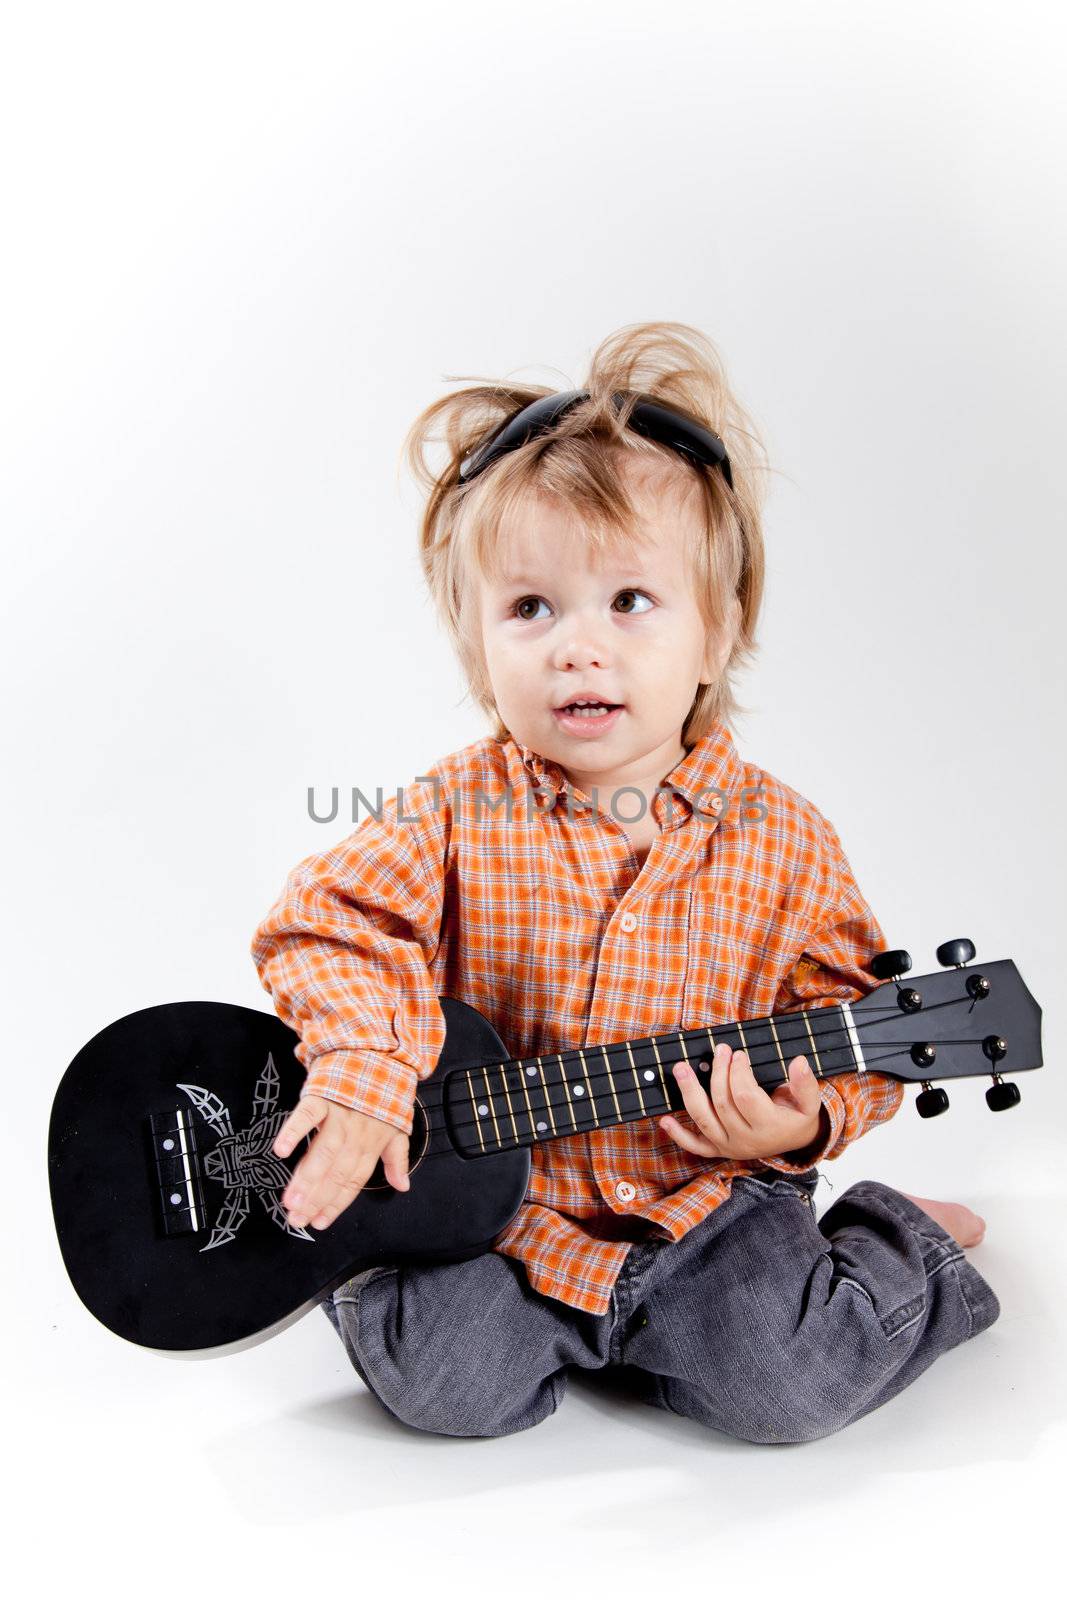 Cute little boy playing ukulele guitar, studio shot 